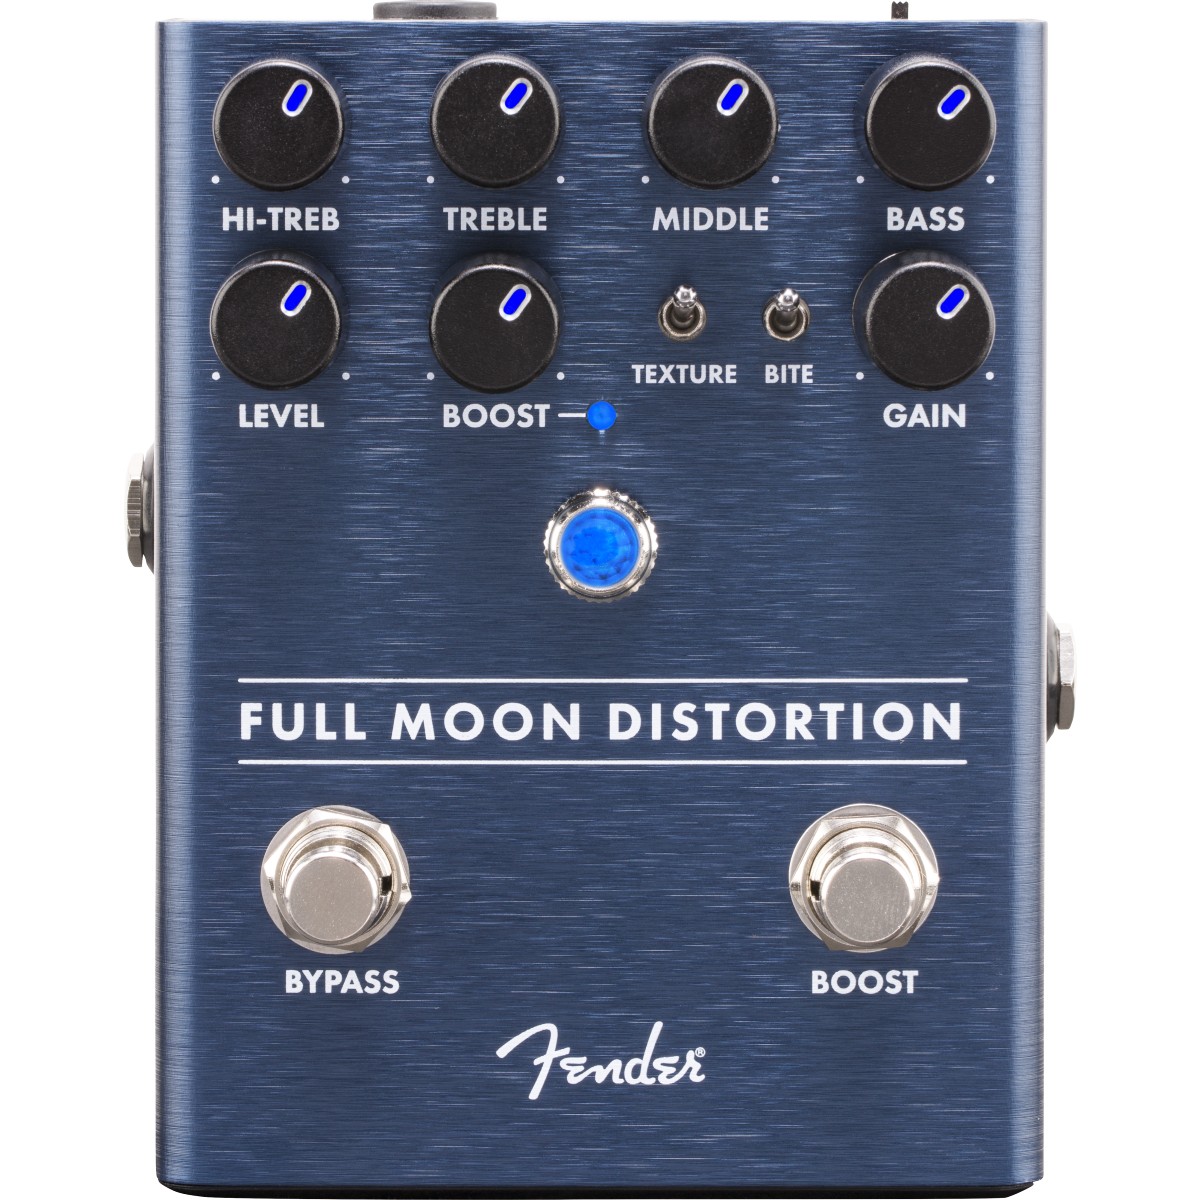 Pedale Fender Full Moon Distortion 0234537000